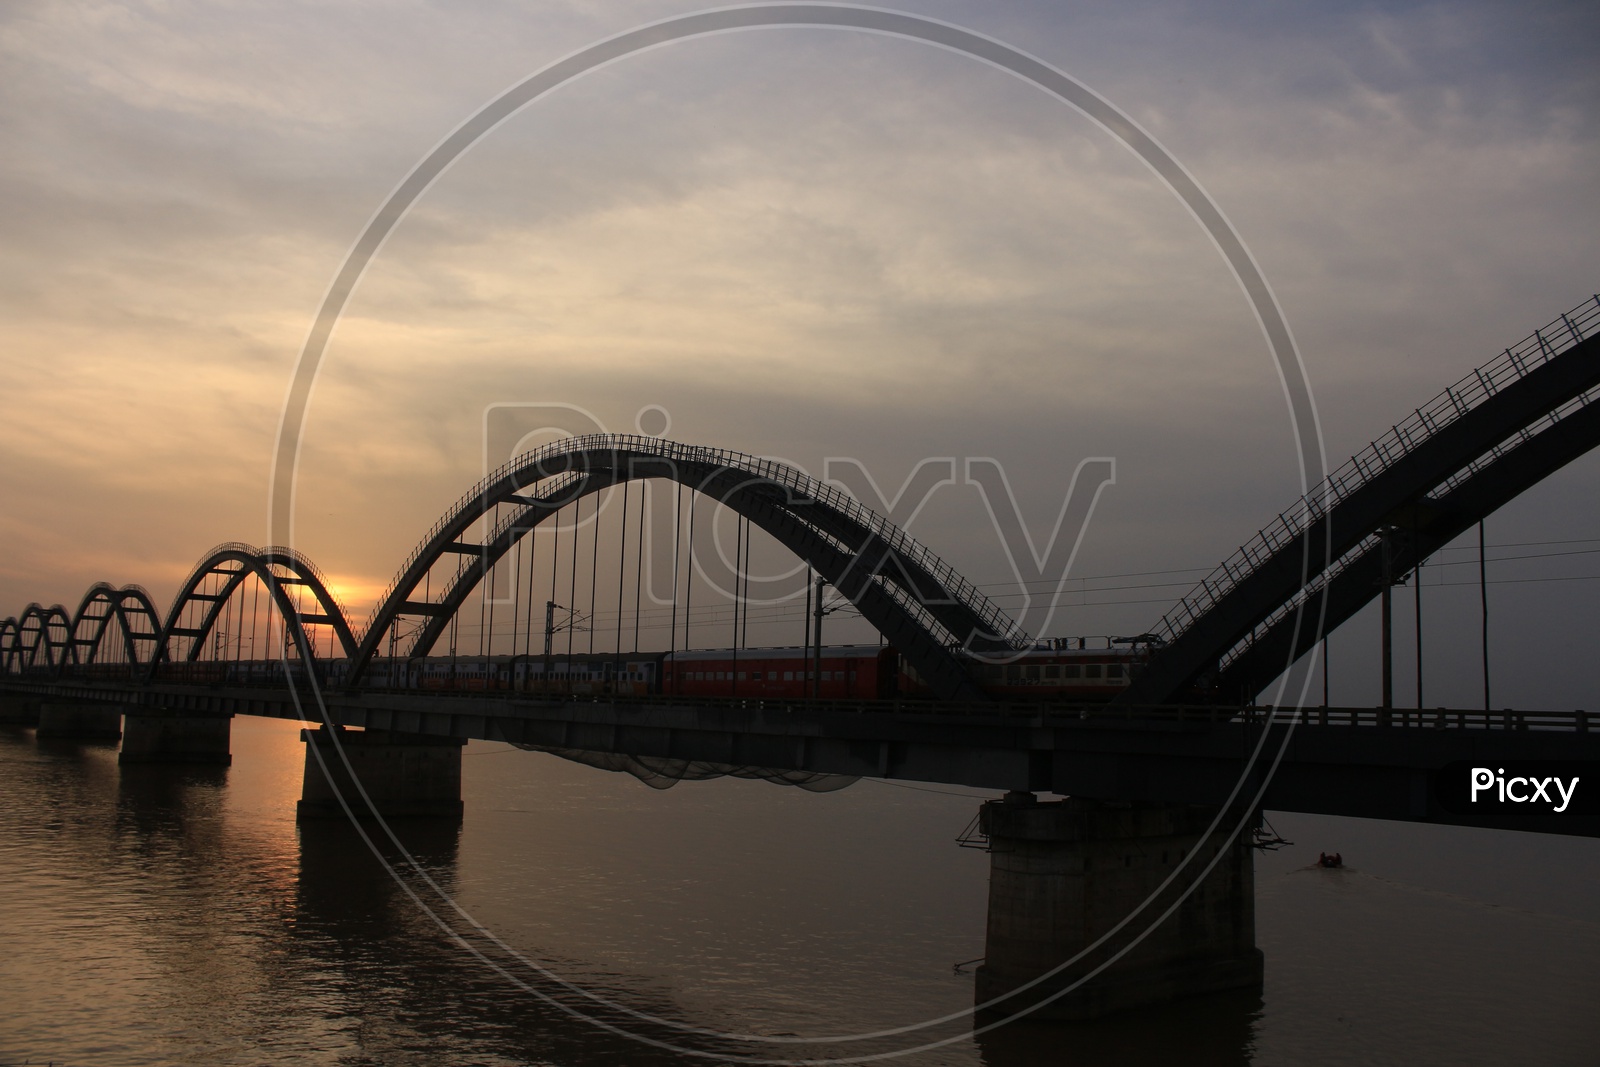 A Beautiful View Of Godavari bridge With train and sunset